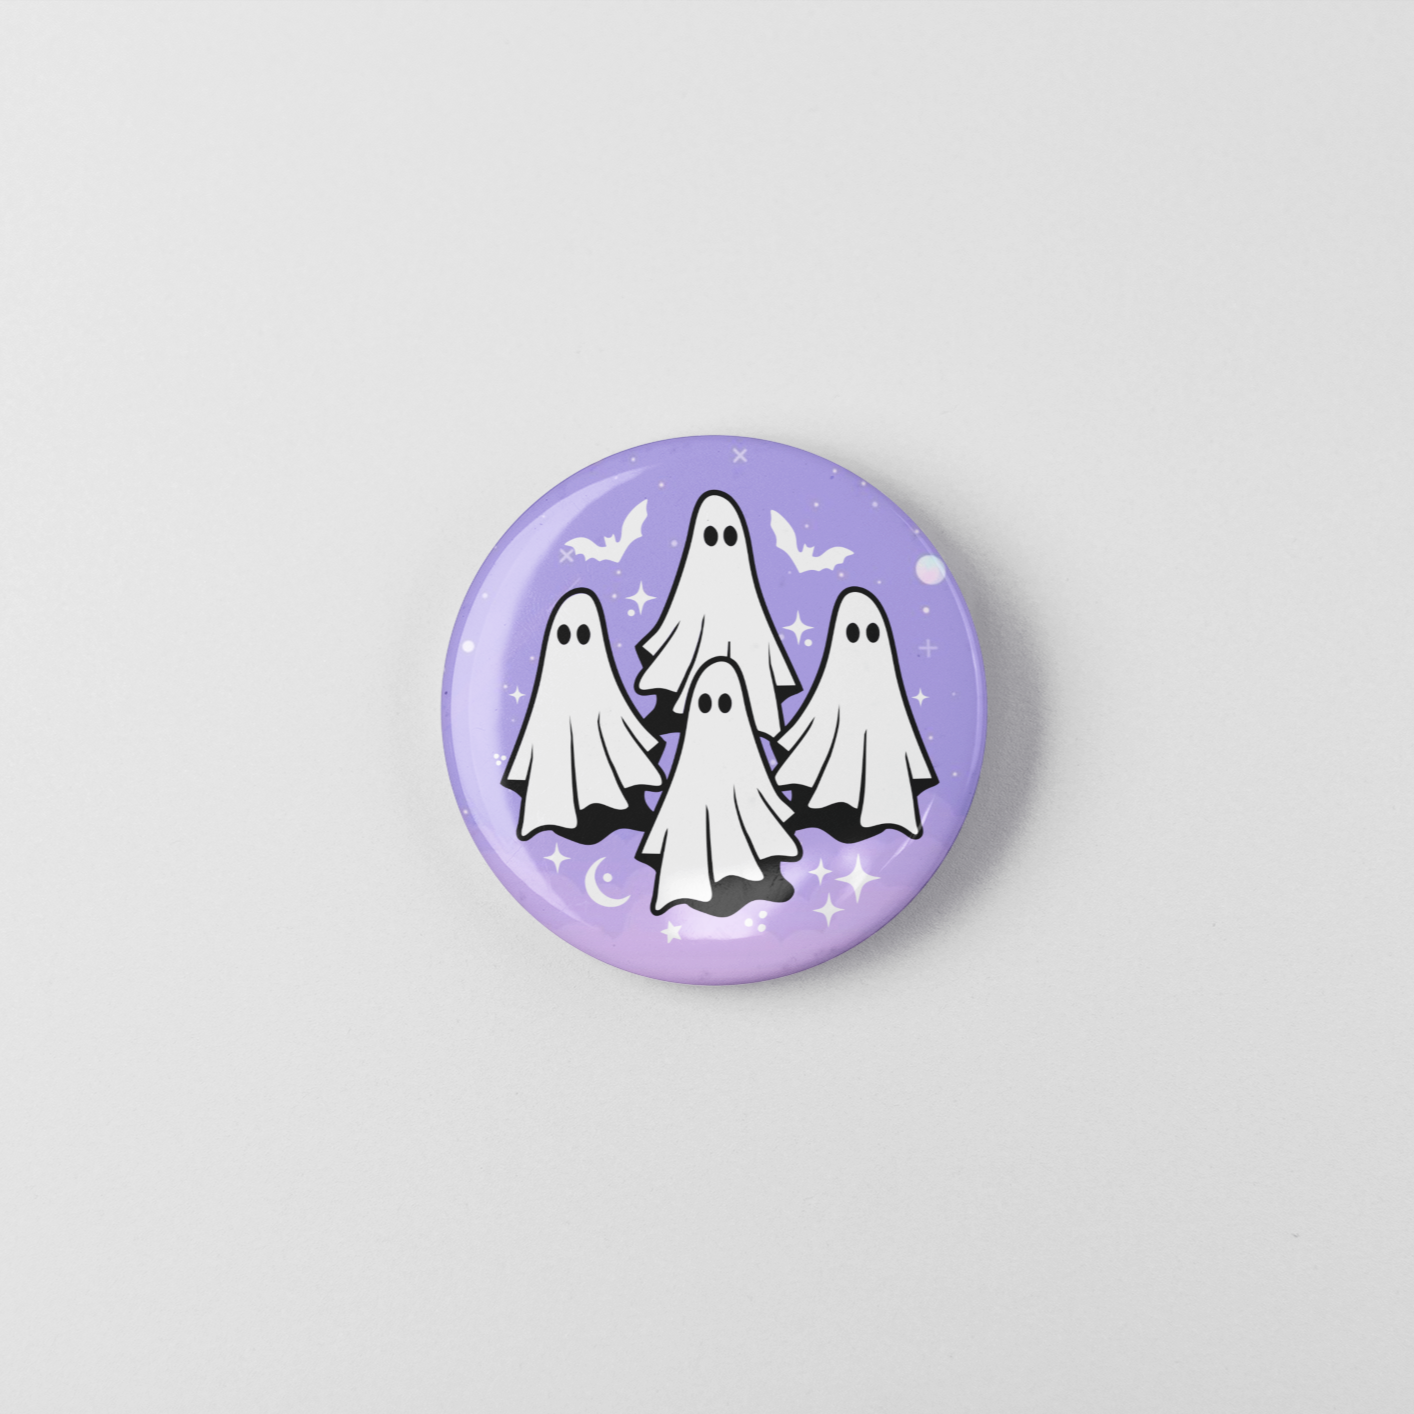 Ghost Crew Pin Badge | Halloween Pins - Cat Lover Gift - Ghost Badges - Spooky Season